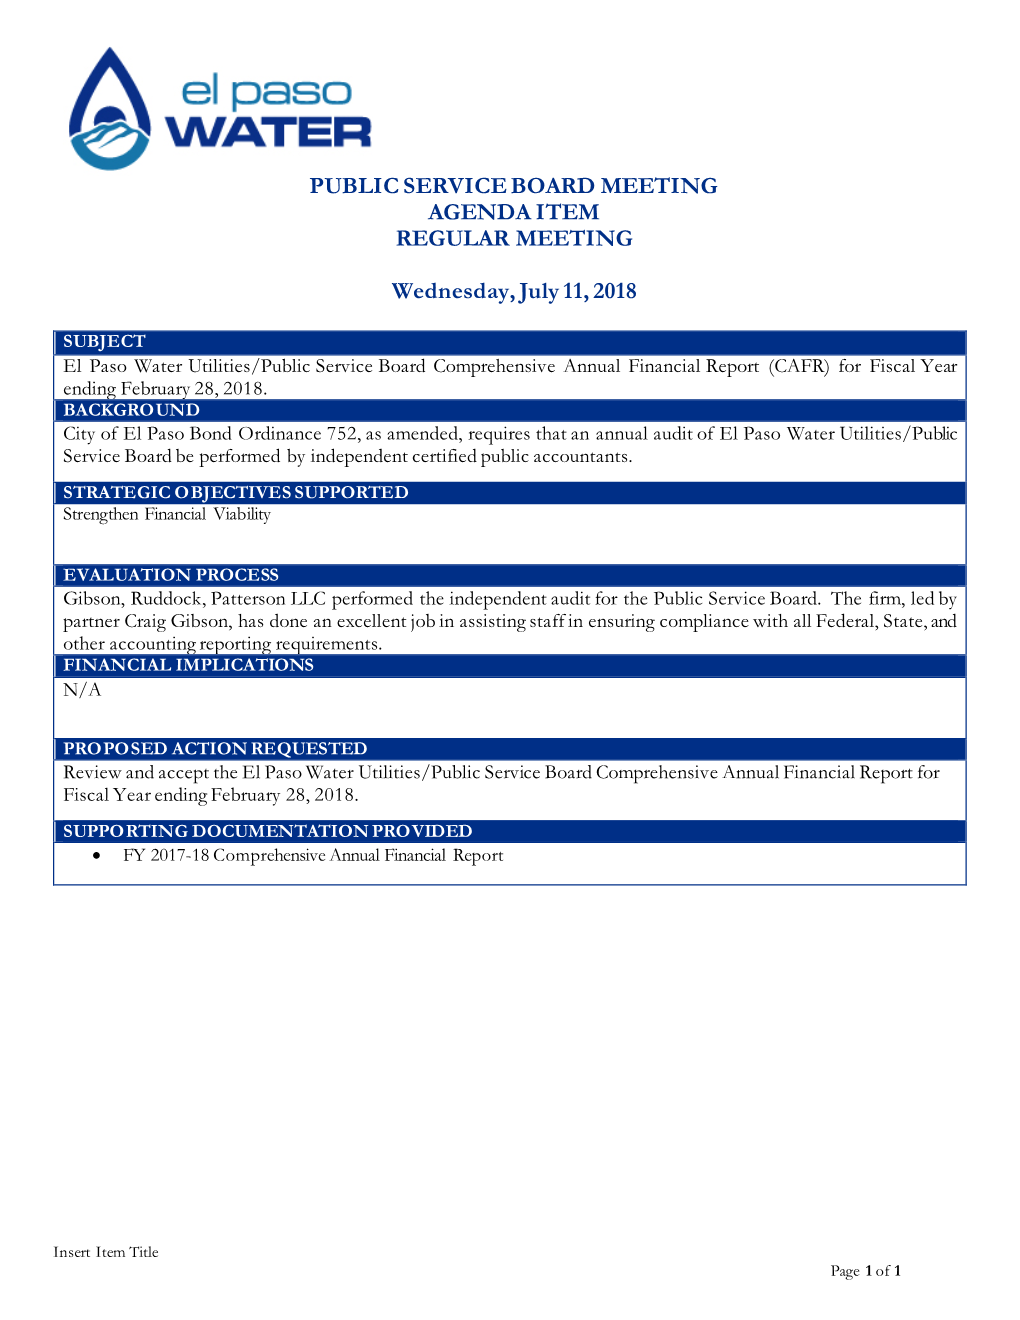 Public Service Board Meeting Agenda Item Regular Meeting